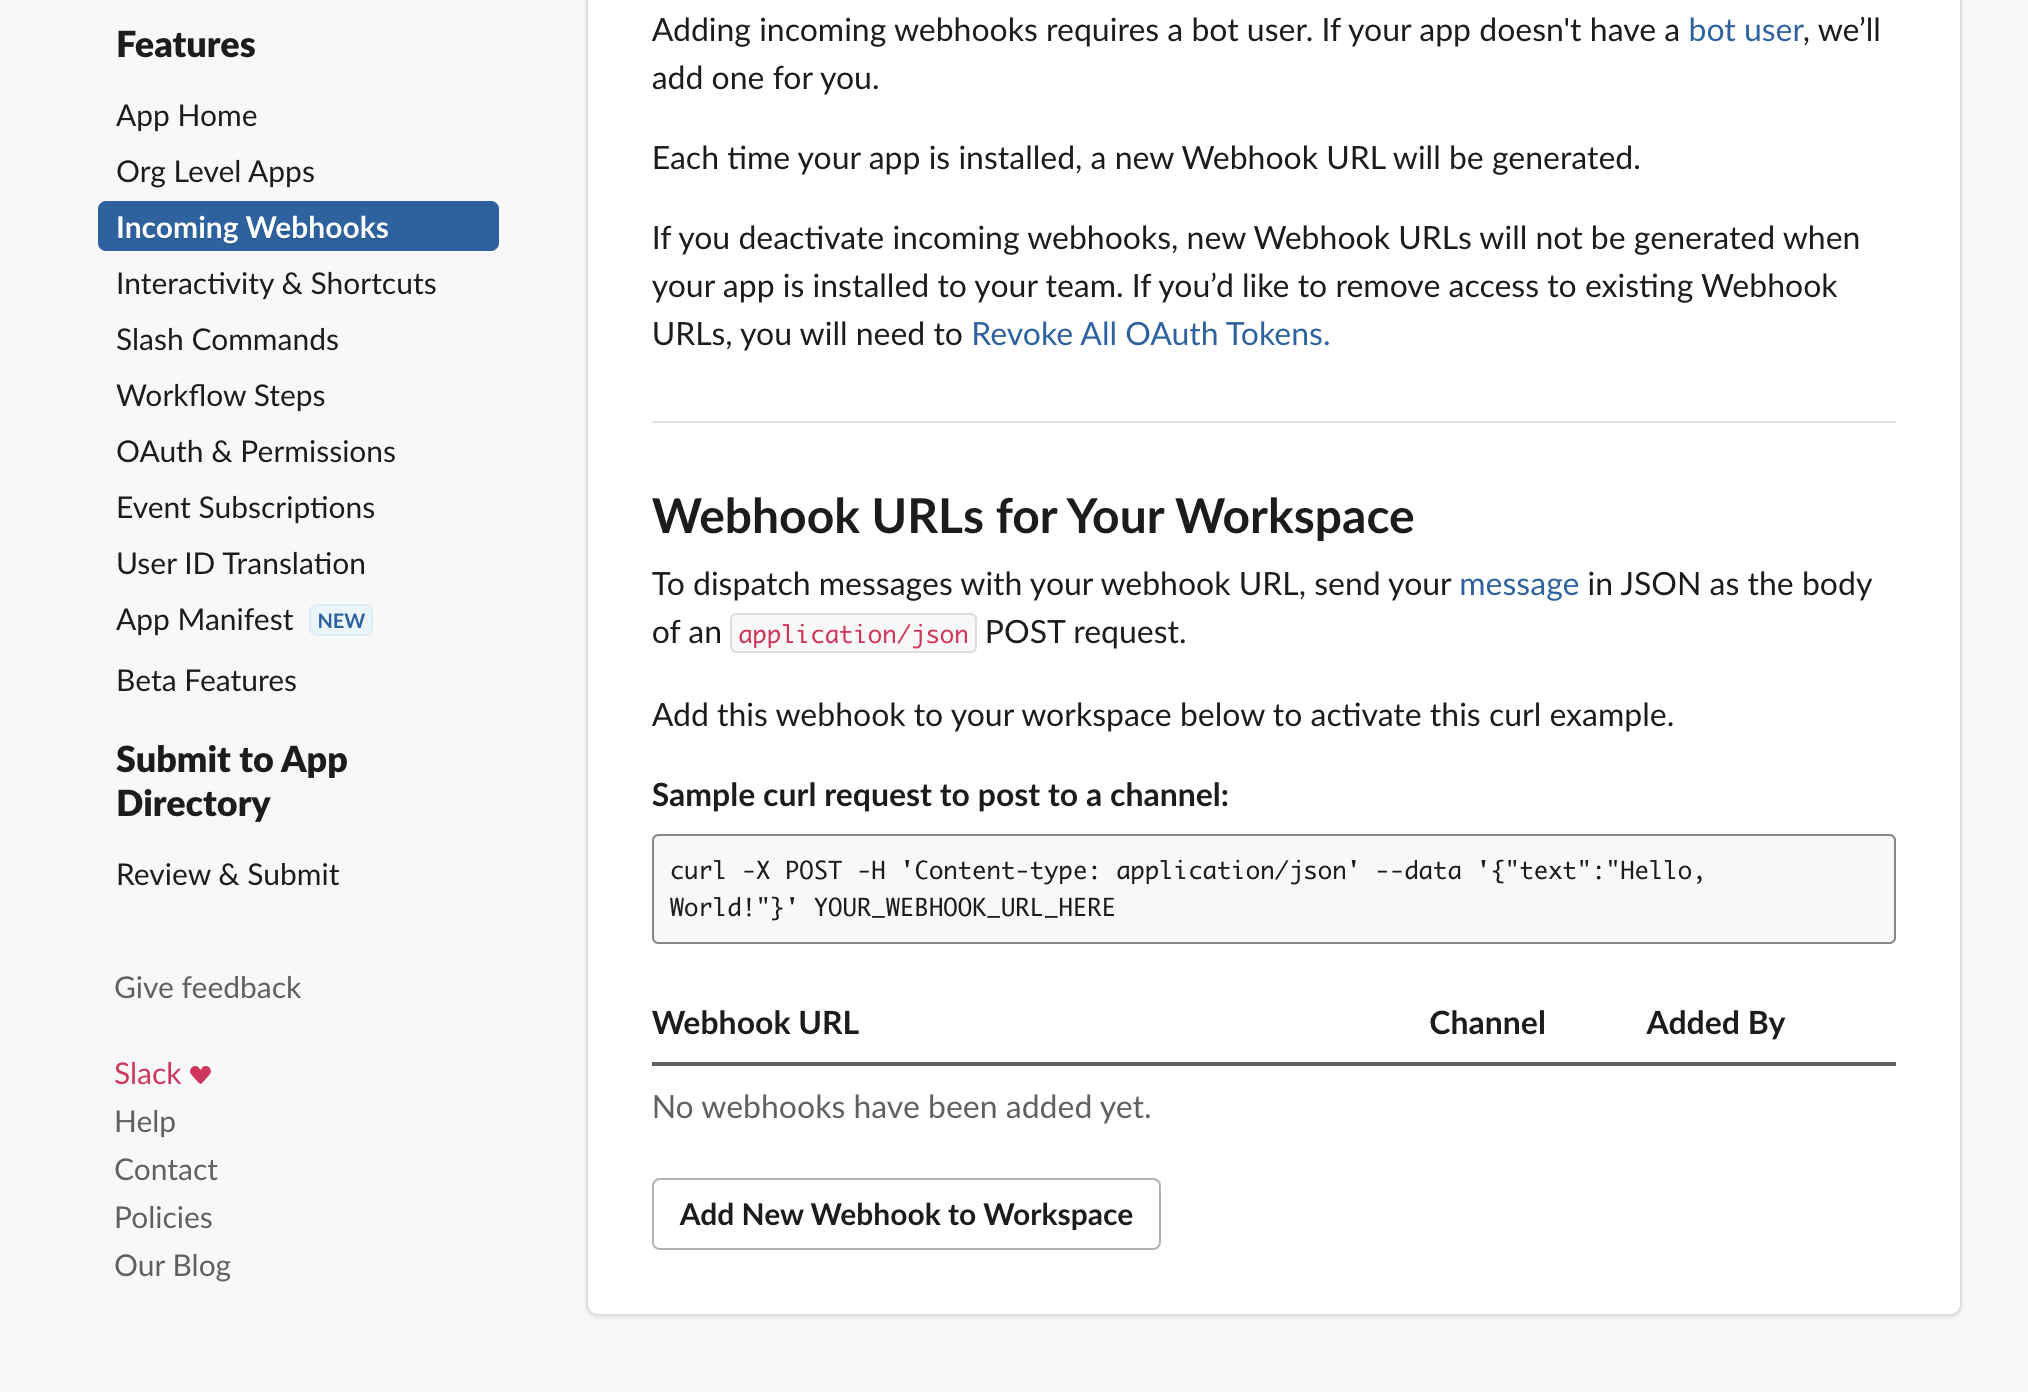 add new webhook to workspace